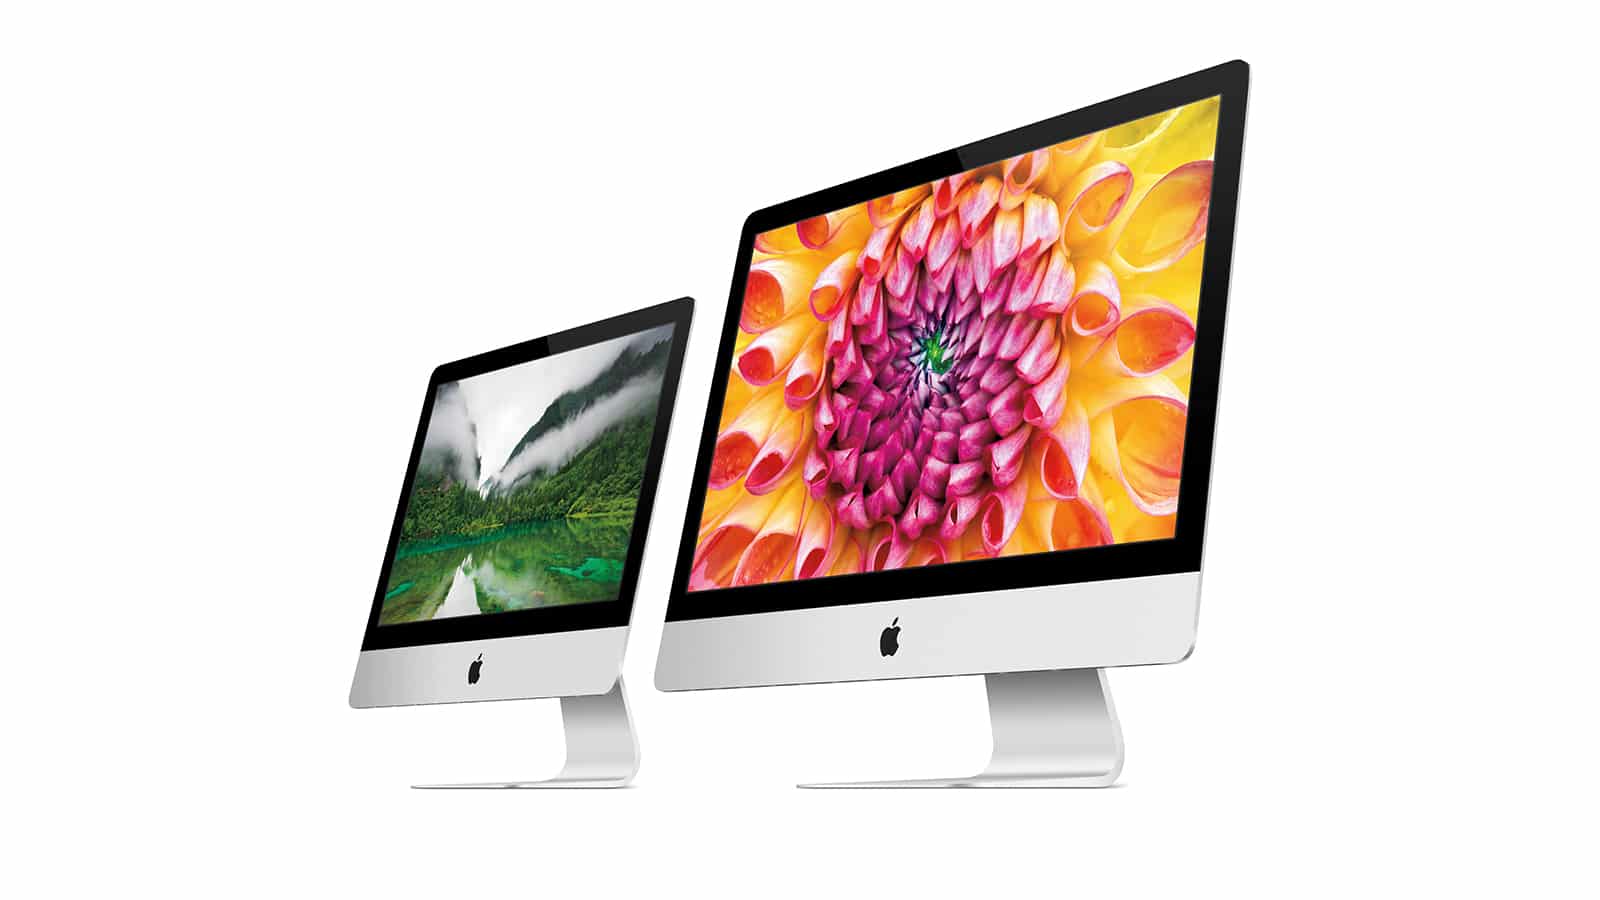 iMac 2012